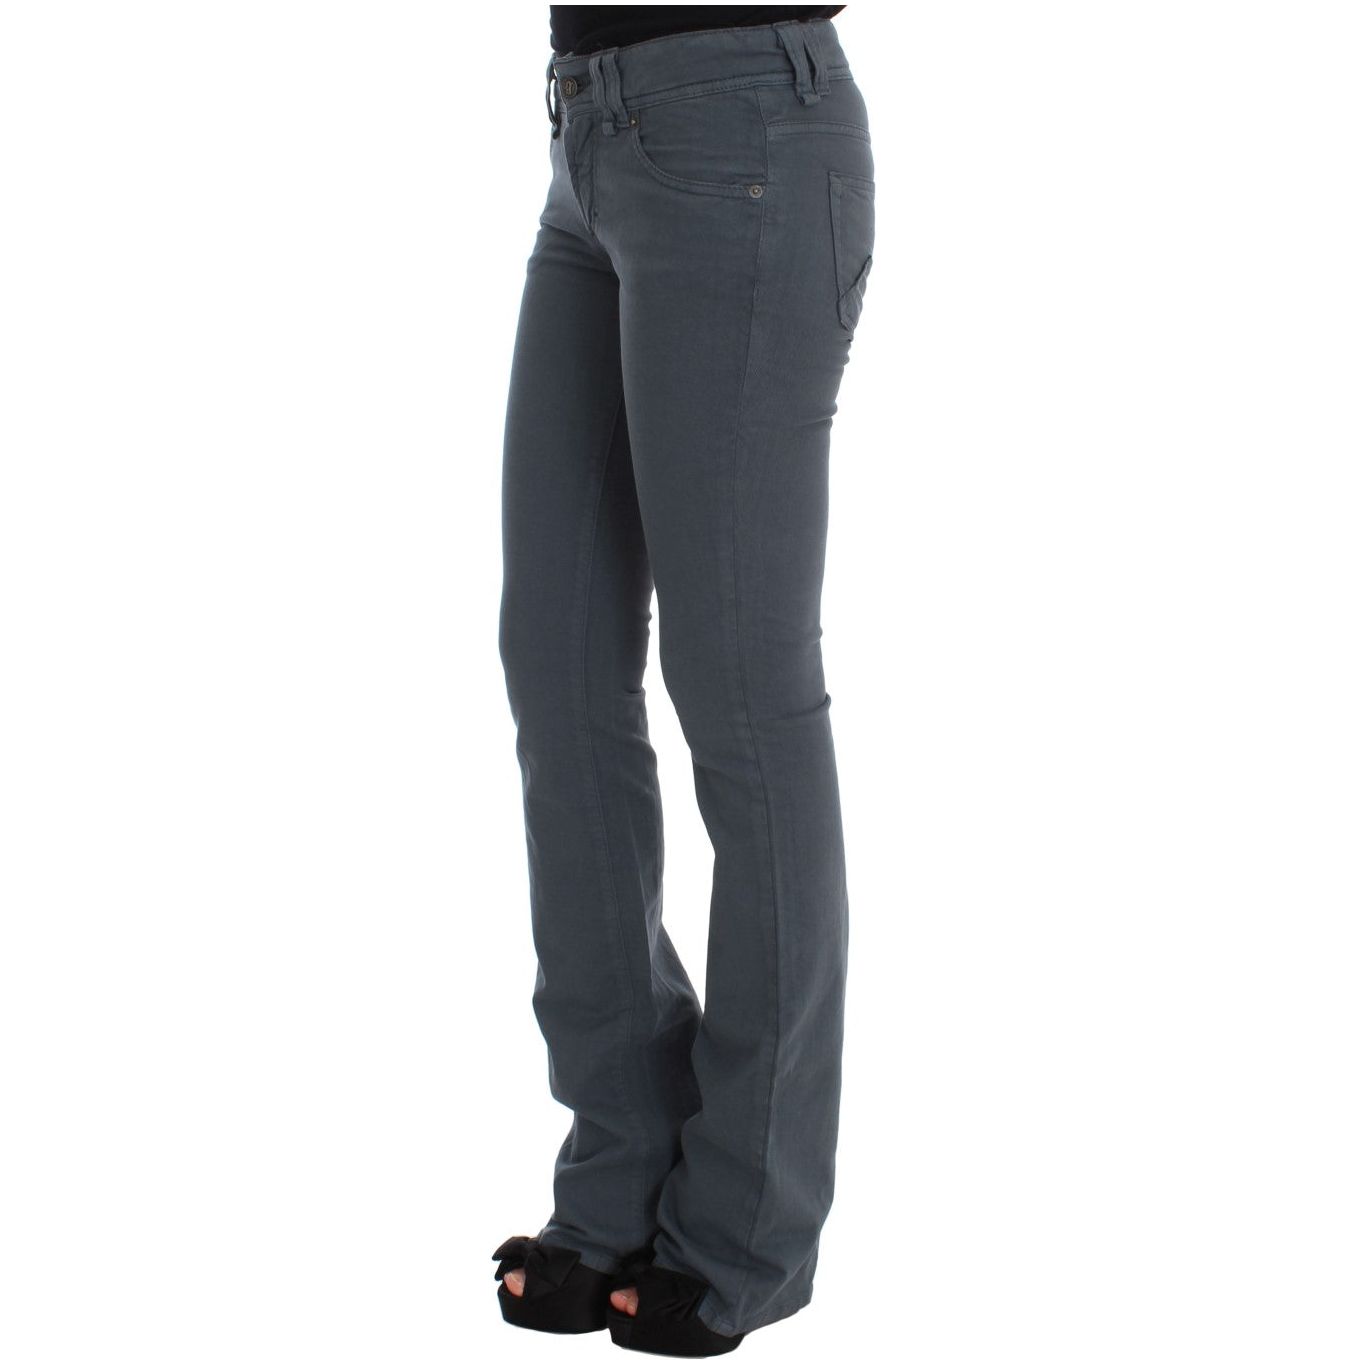 John Galliano Elegant Slim Fit Bootcut Jeans Jeans & Pants blue-cotton-blend-slim-fit-bootcut-jeans-2 330188-blue-cotton-blend-slim-fit-bootcut-jeans-3-1.jpg